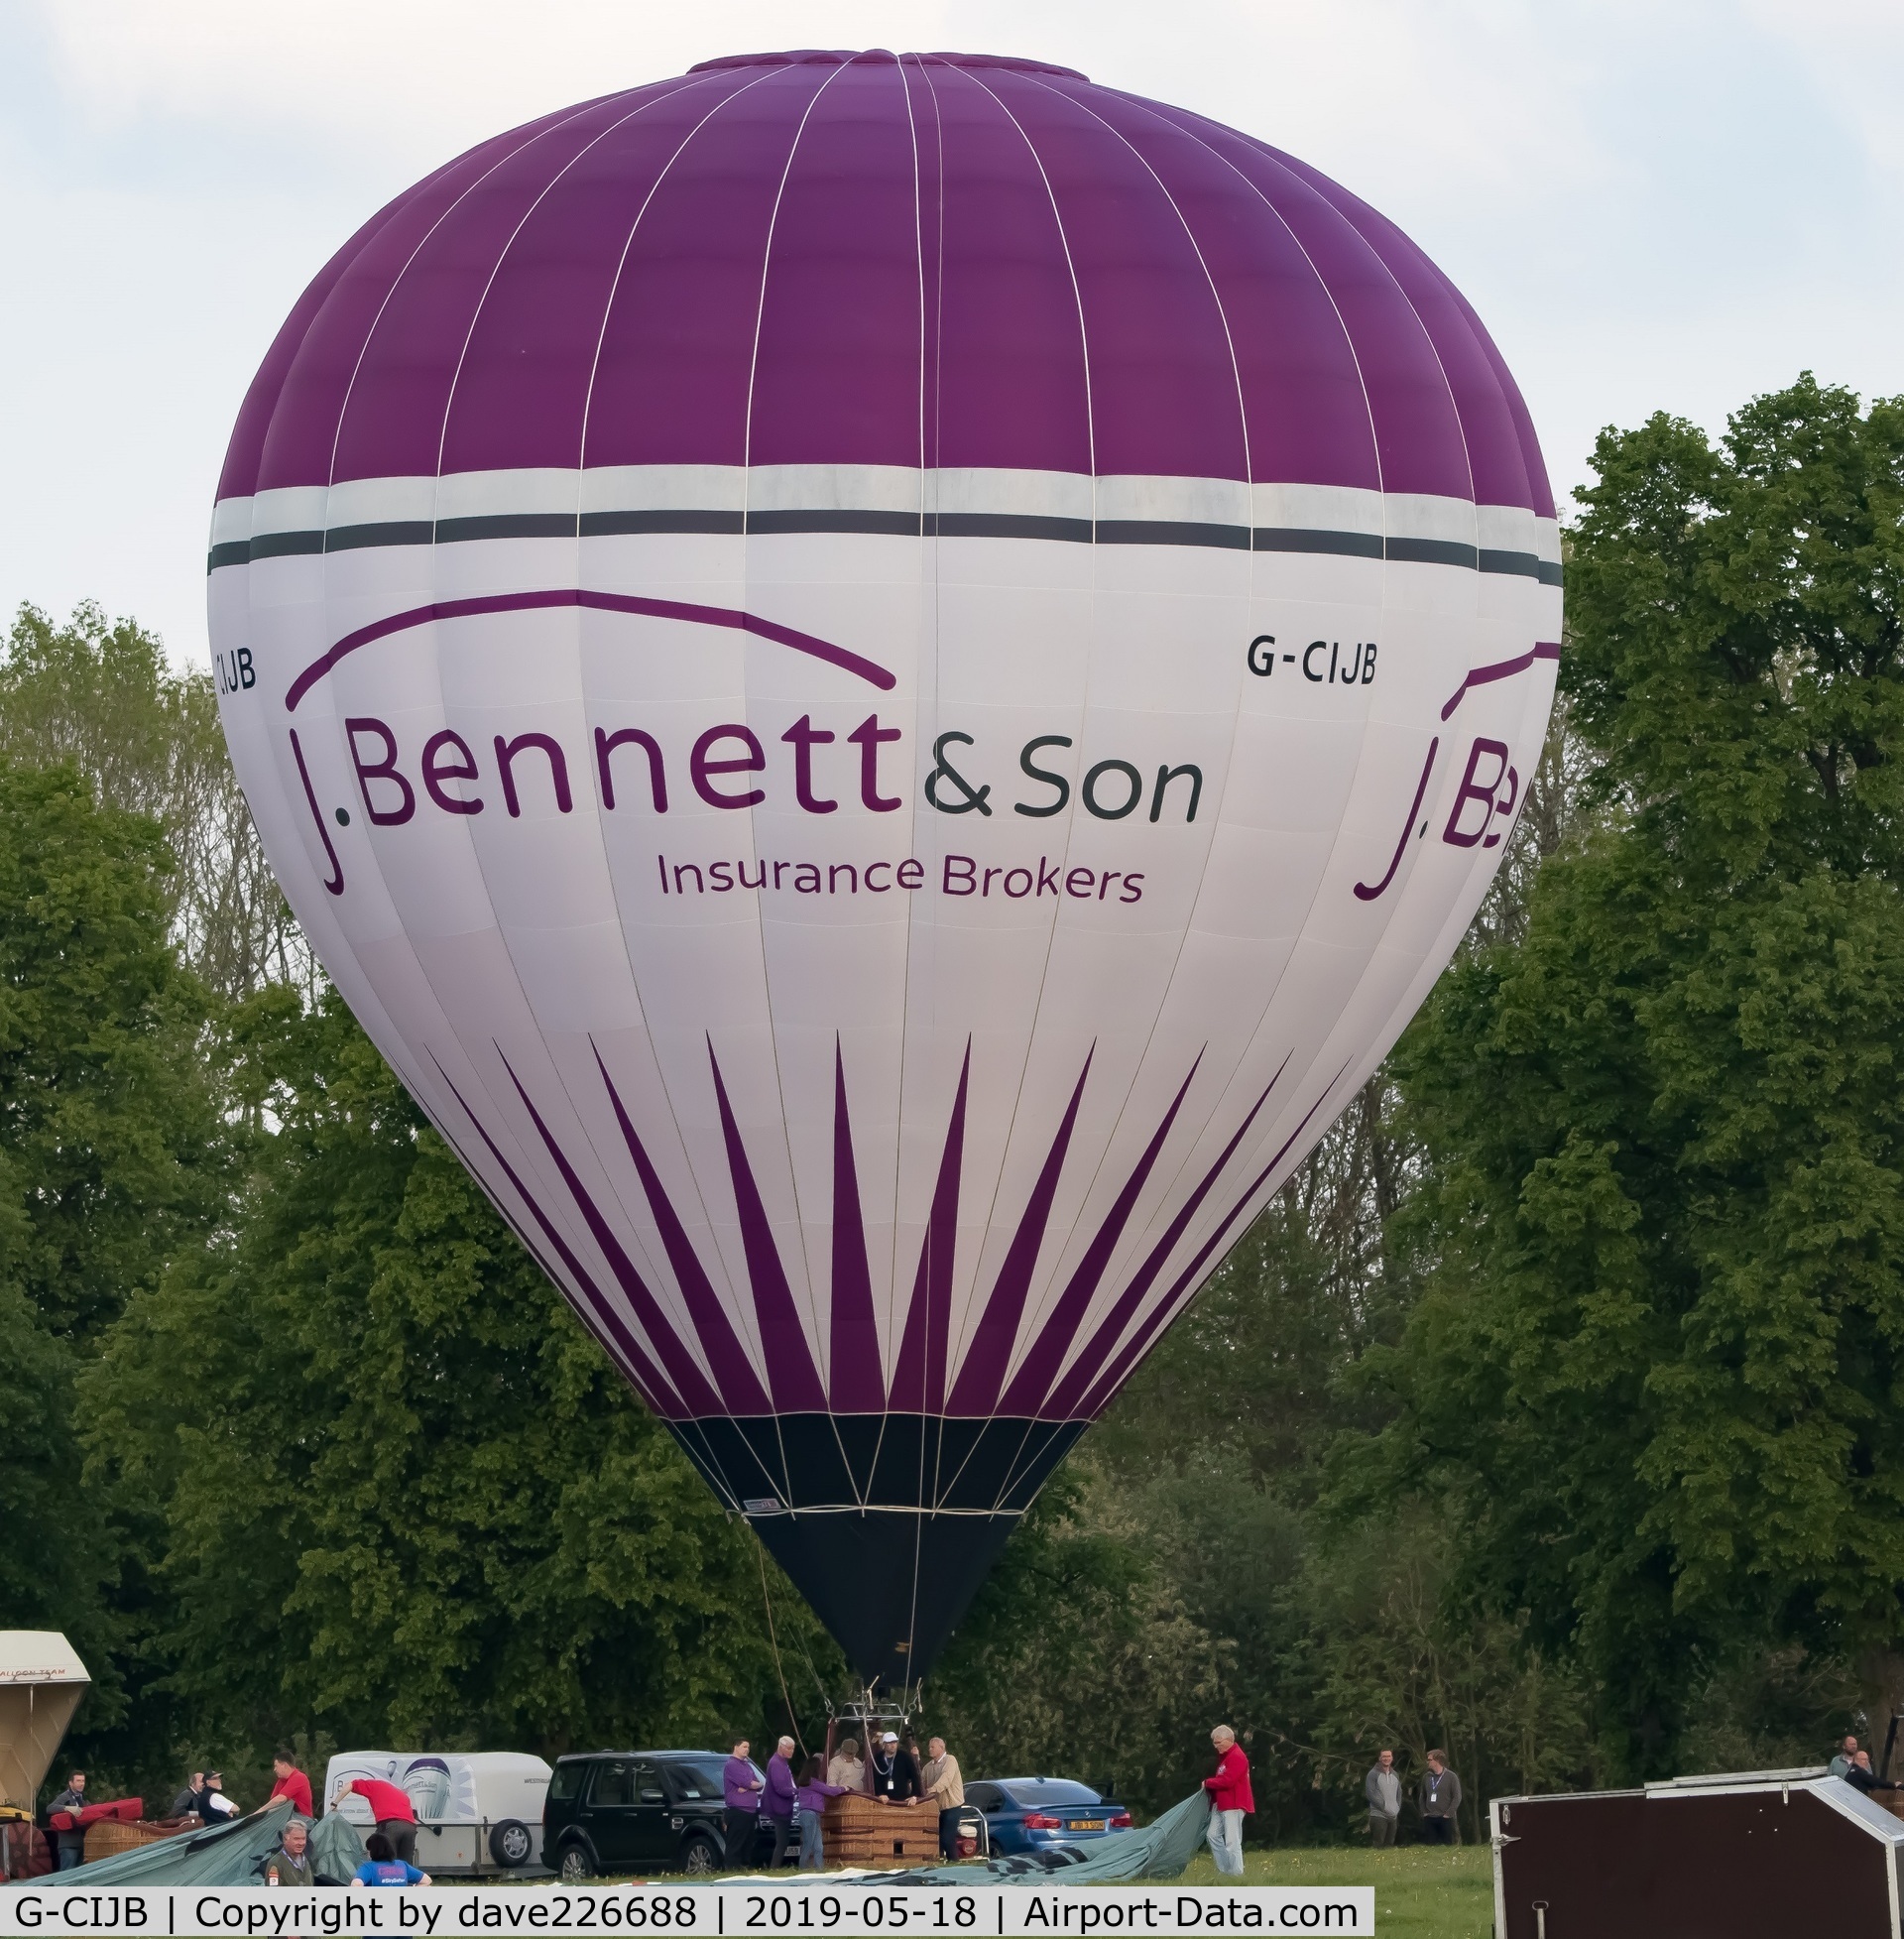 G-CIJB, 2014 Cameron Balloons Z-90 C/N 11806, G CIJB at the Midlands Air Festival 2019